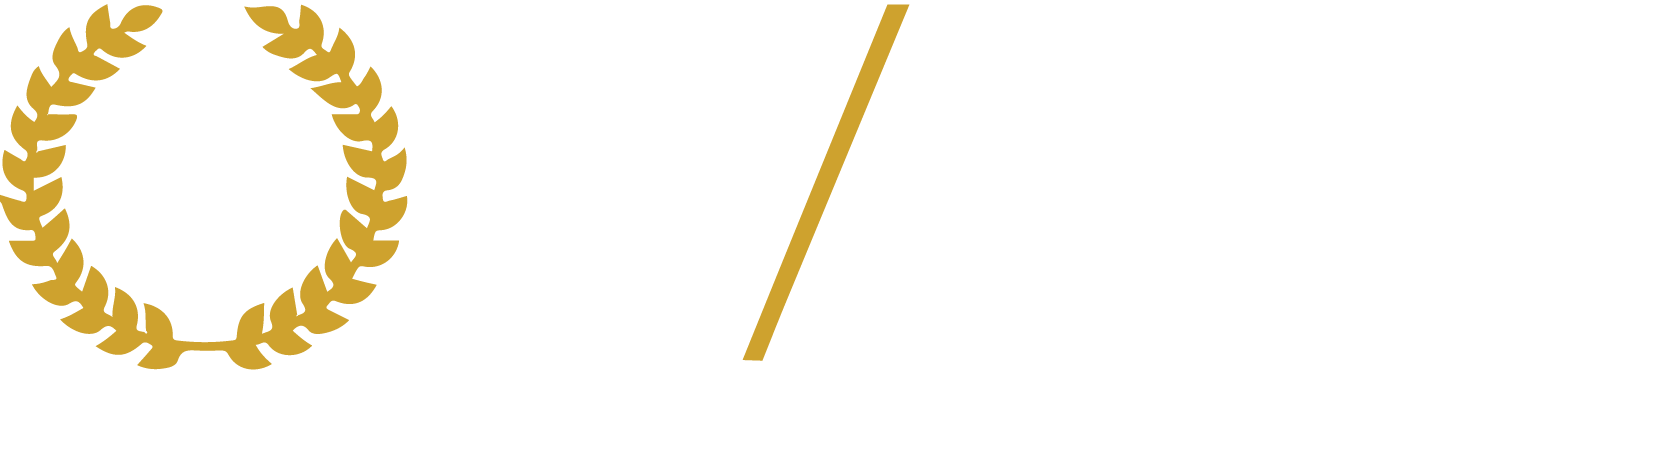 Accreditation Logo 1